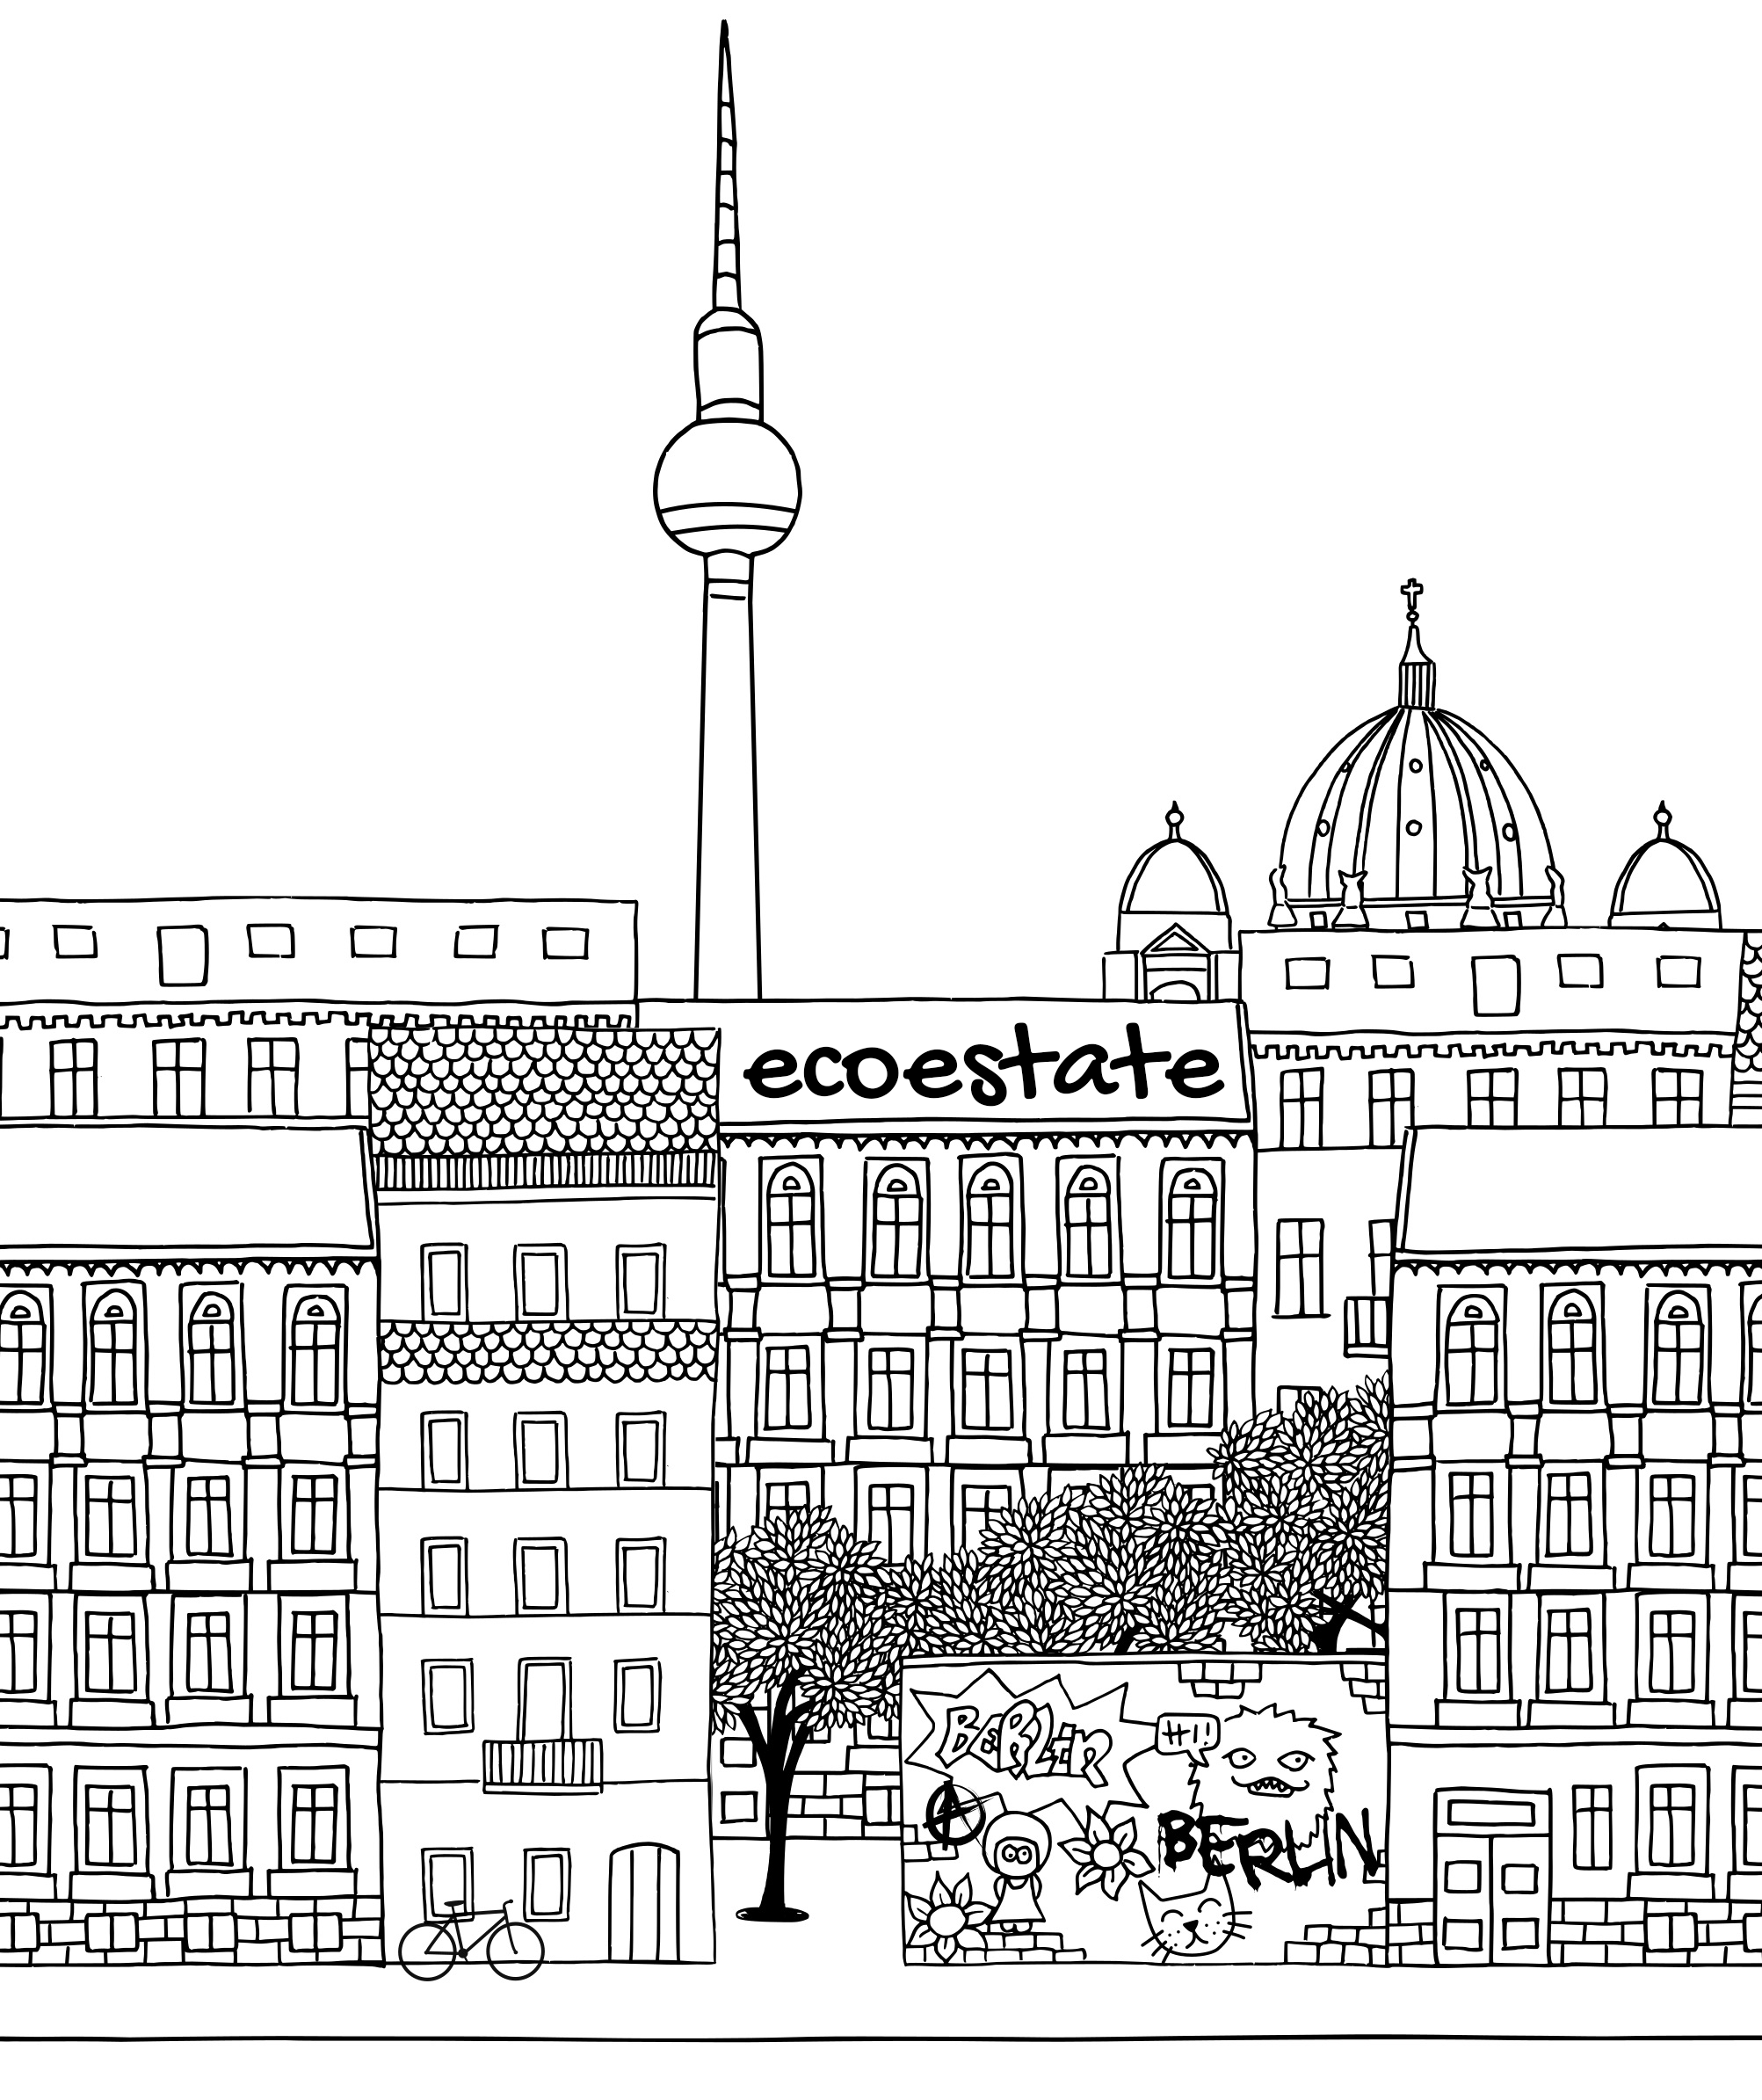 Makler in Berlin Mural